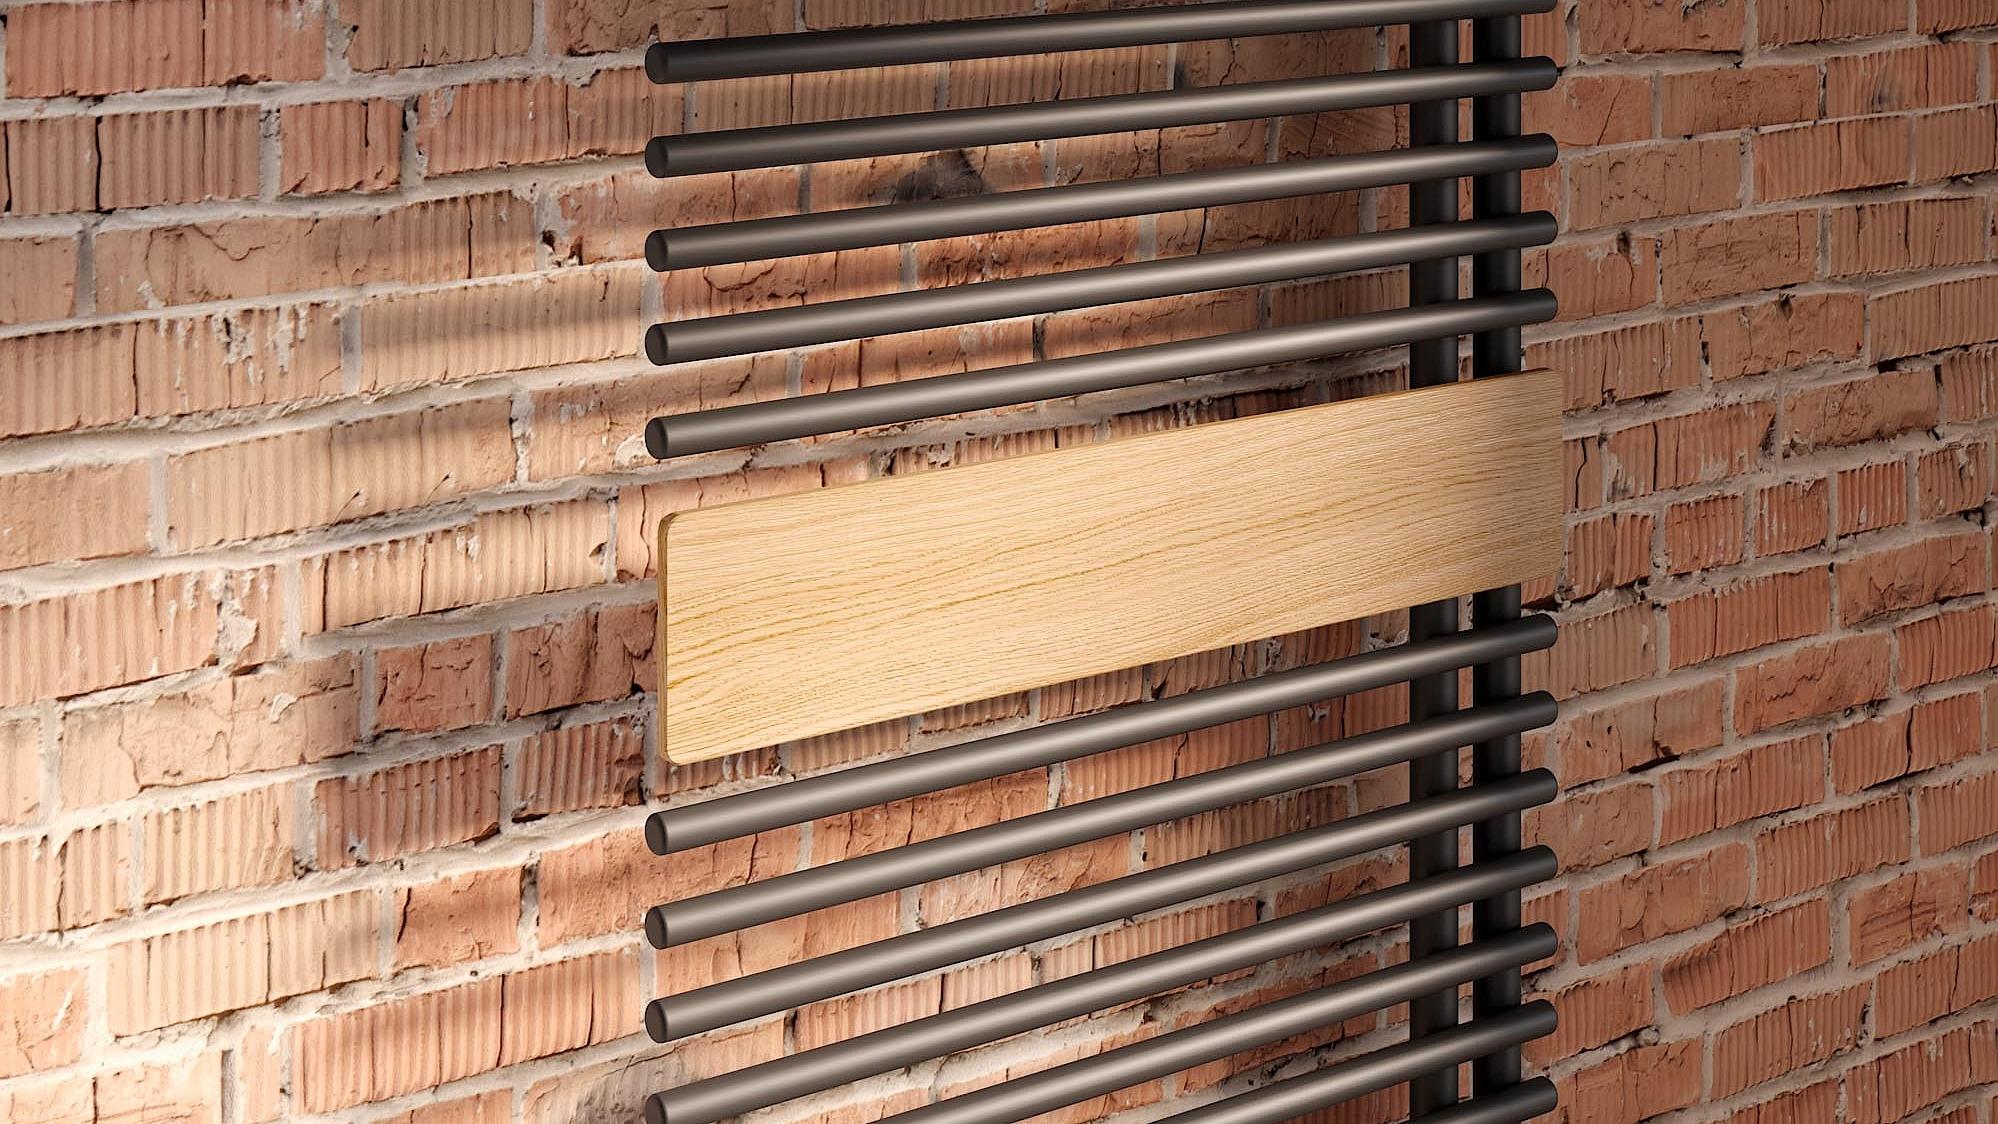 Kermi Credo Half round design and bathroom radiators, design element available in Real Wood – Light Oak version.